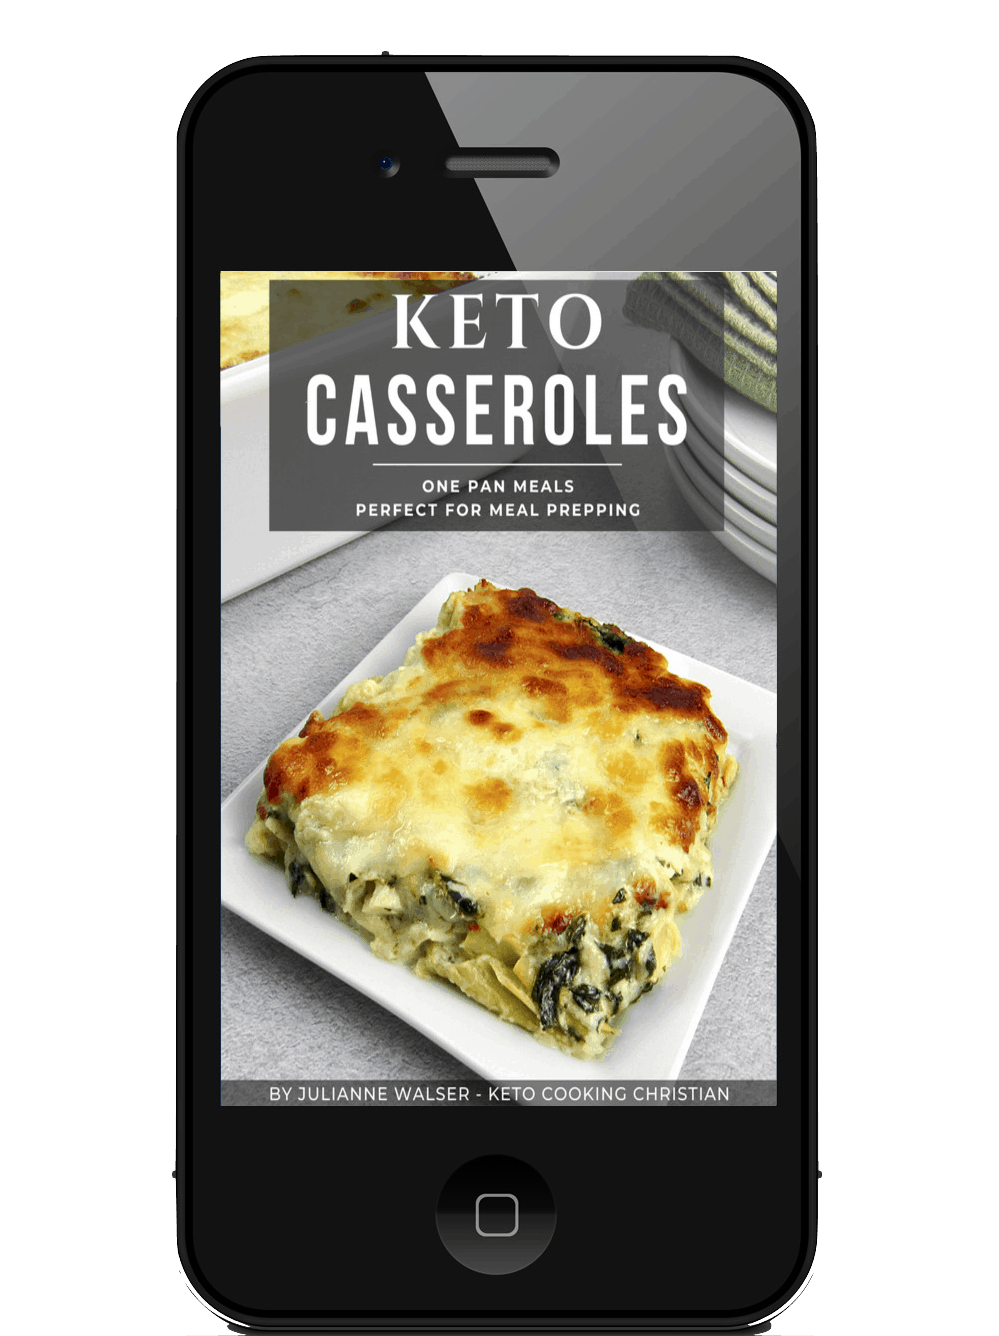 Keto Casseroles eBook on Mobile device